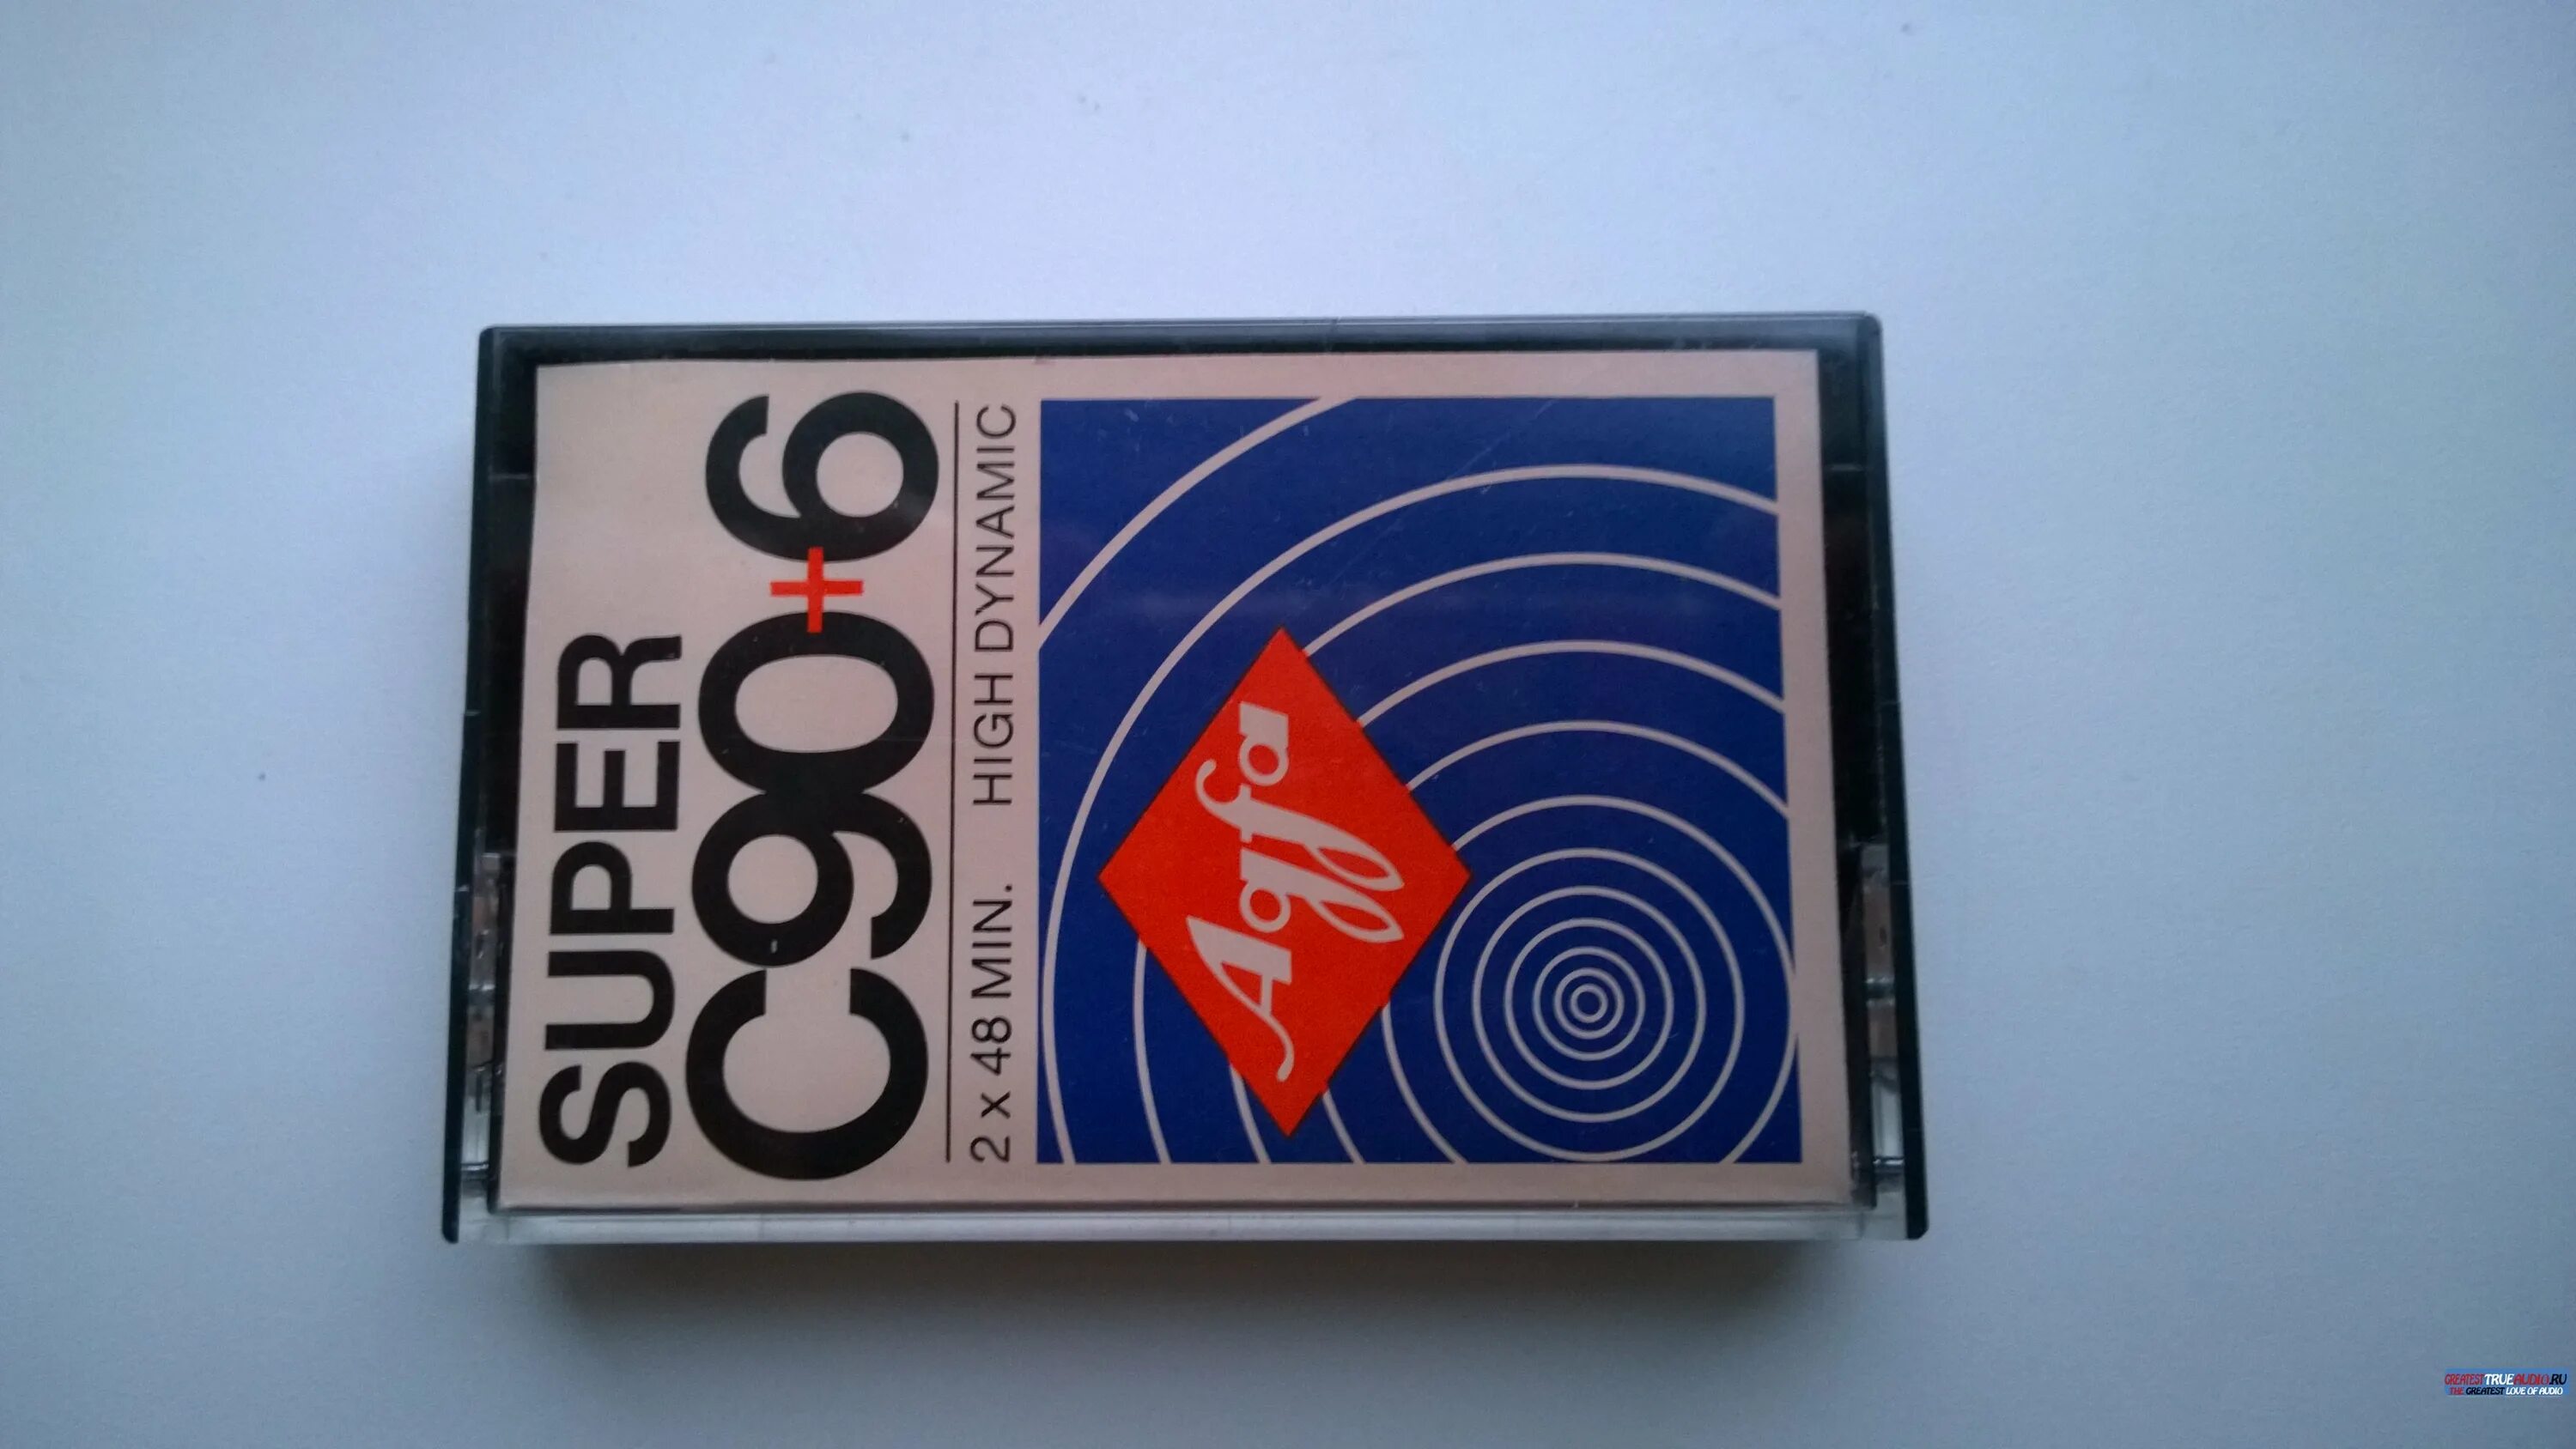 6.90. Compact Cassette c 90 Agfa. Аудиокассета Agfa 90. Магнитофонная кассета Agfa хромовая. Кассета Agfa GX E-180.